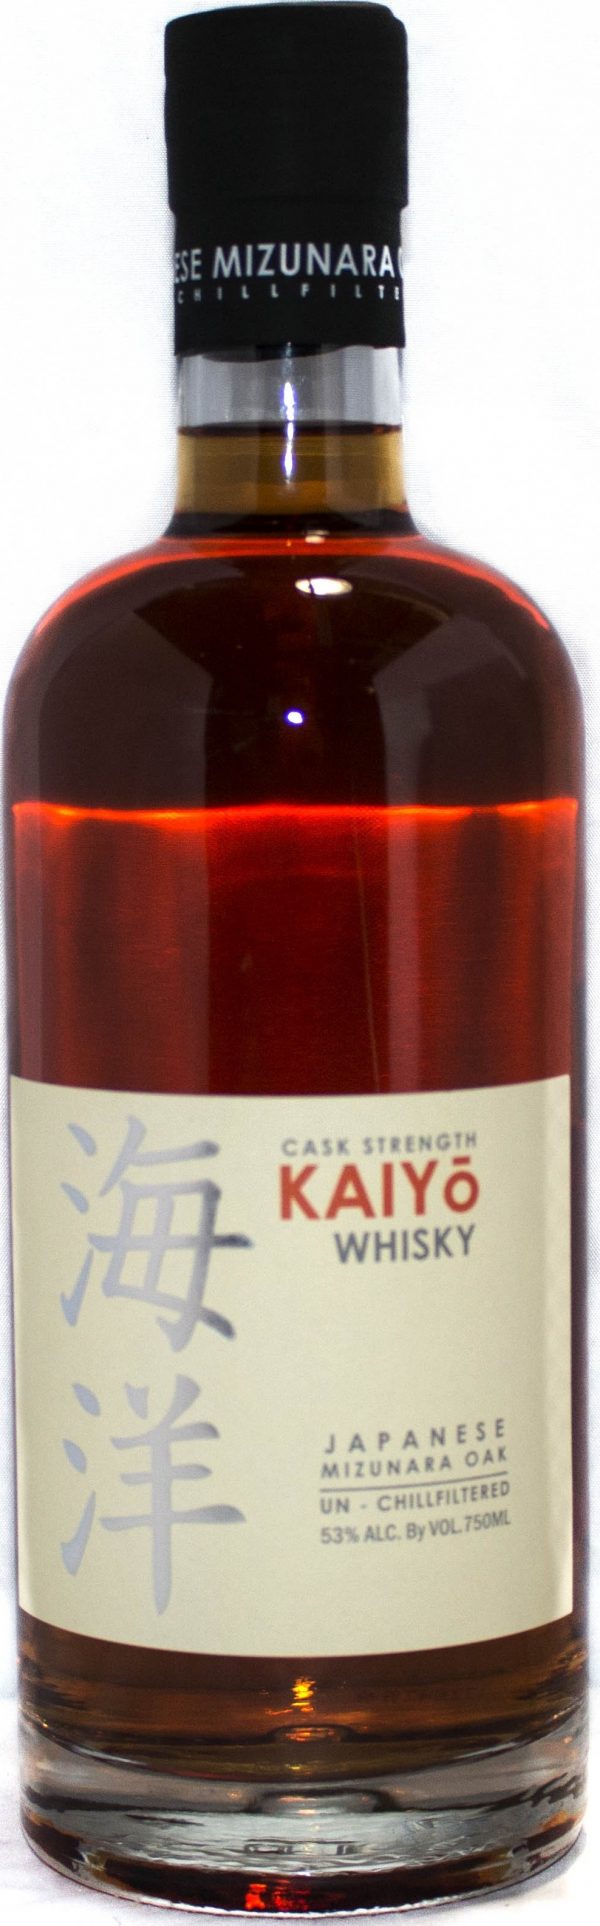 Zoom to enlarge the Kaiyo Mizunara Oak Cask Strength Japanese Whisky